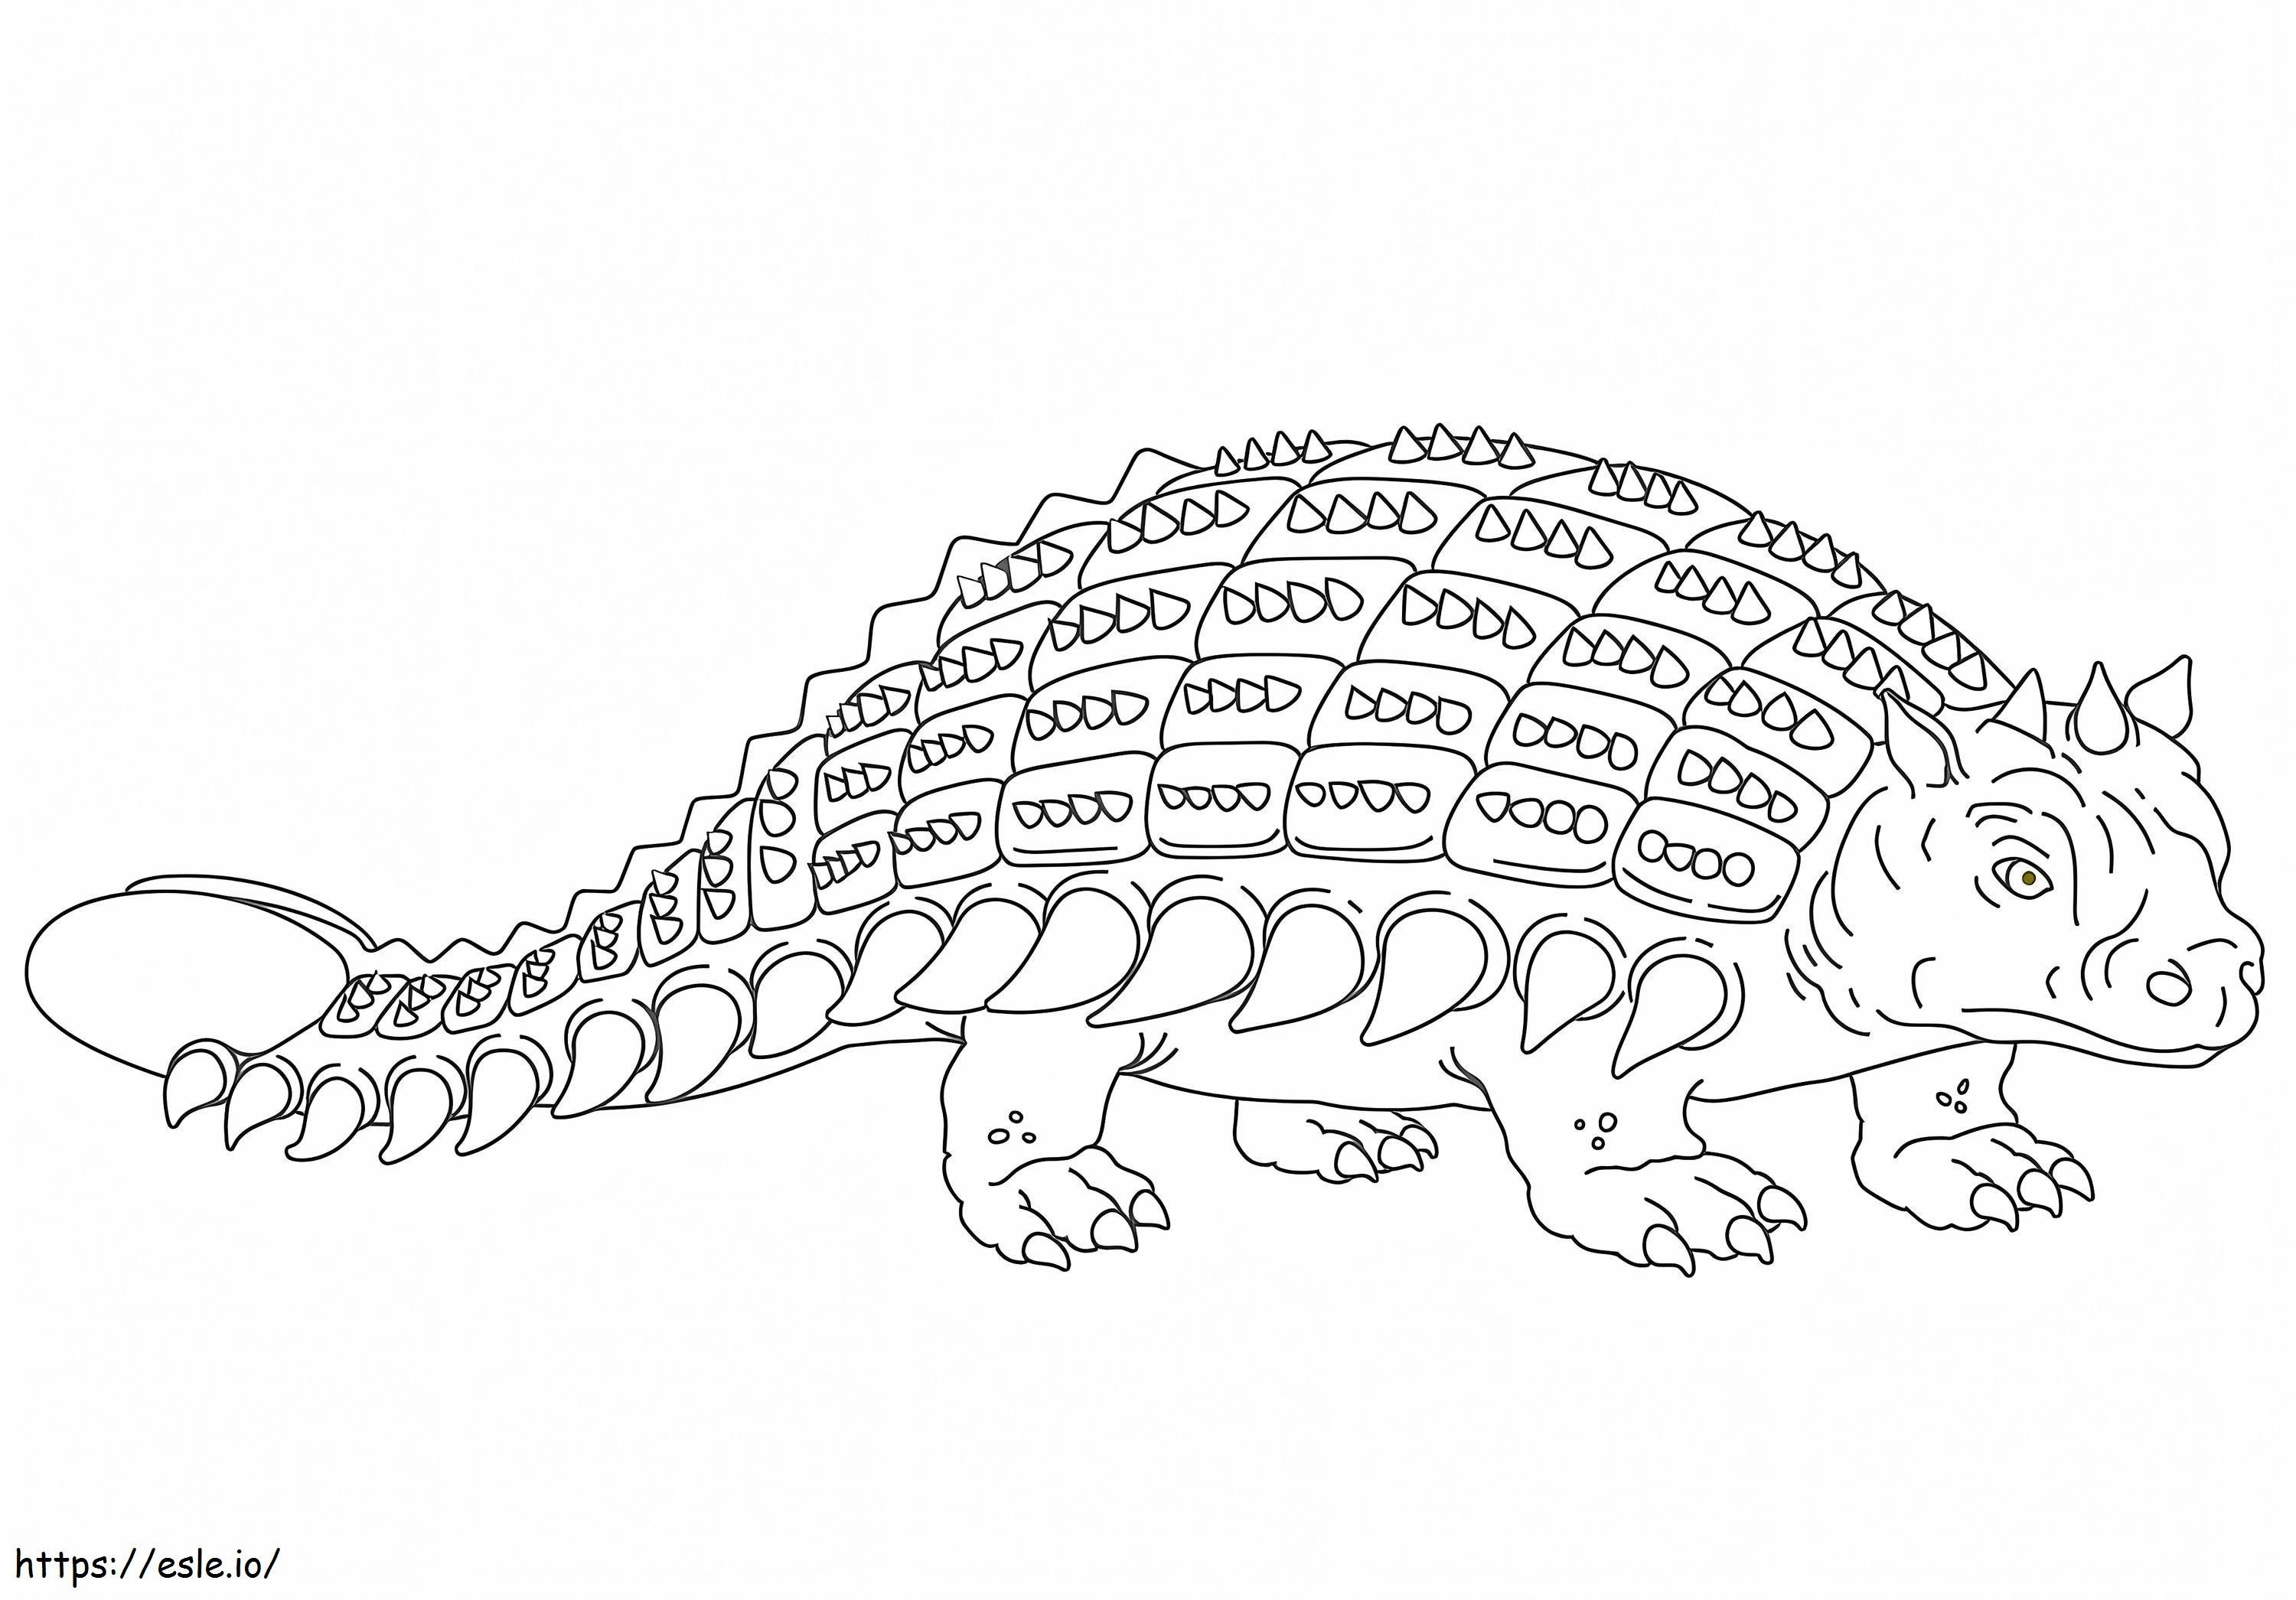 Ankylosaurus Printable coloring page